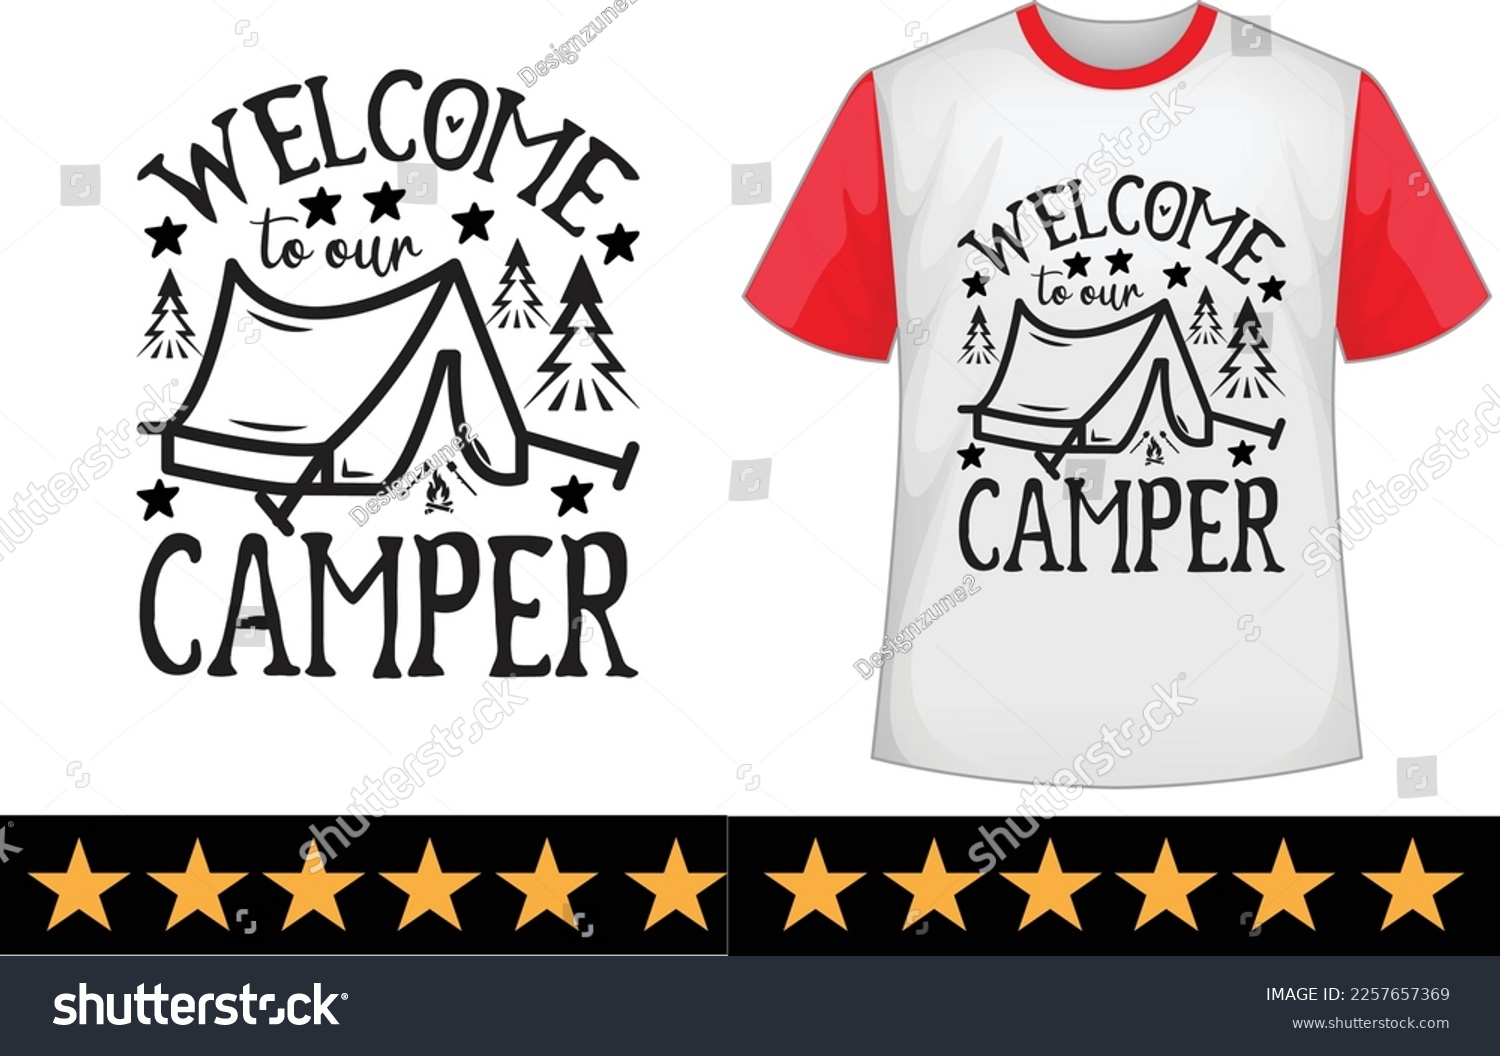 SVG of Welcome to our camper svg t shirt design svg